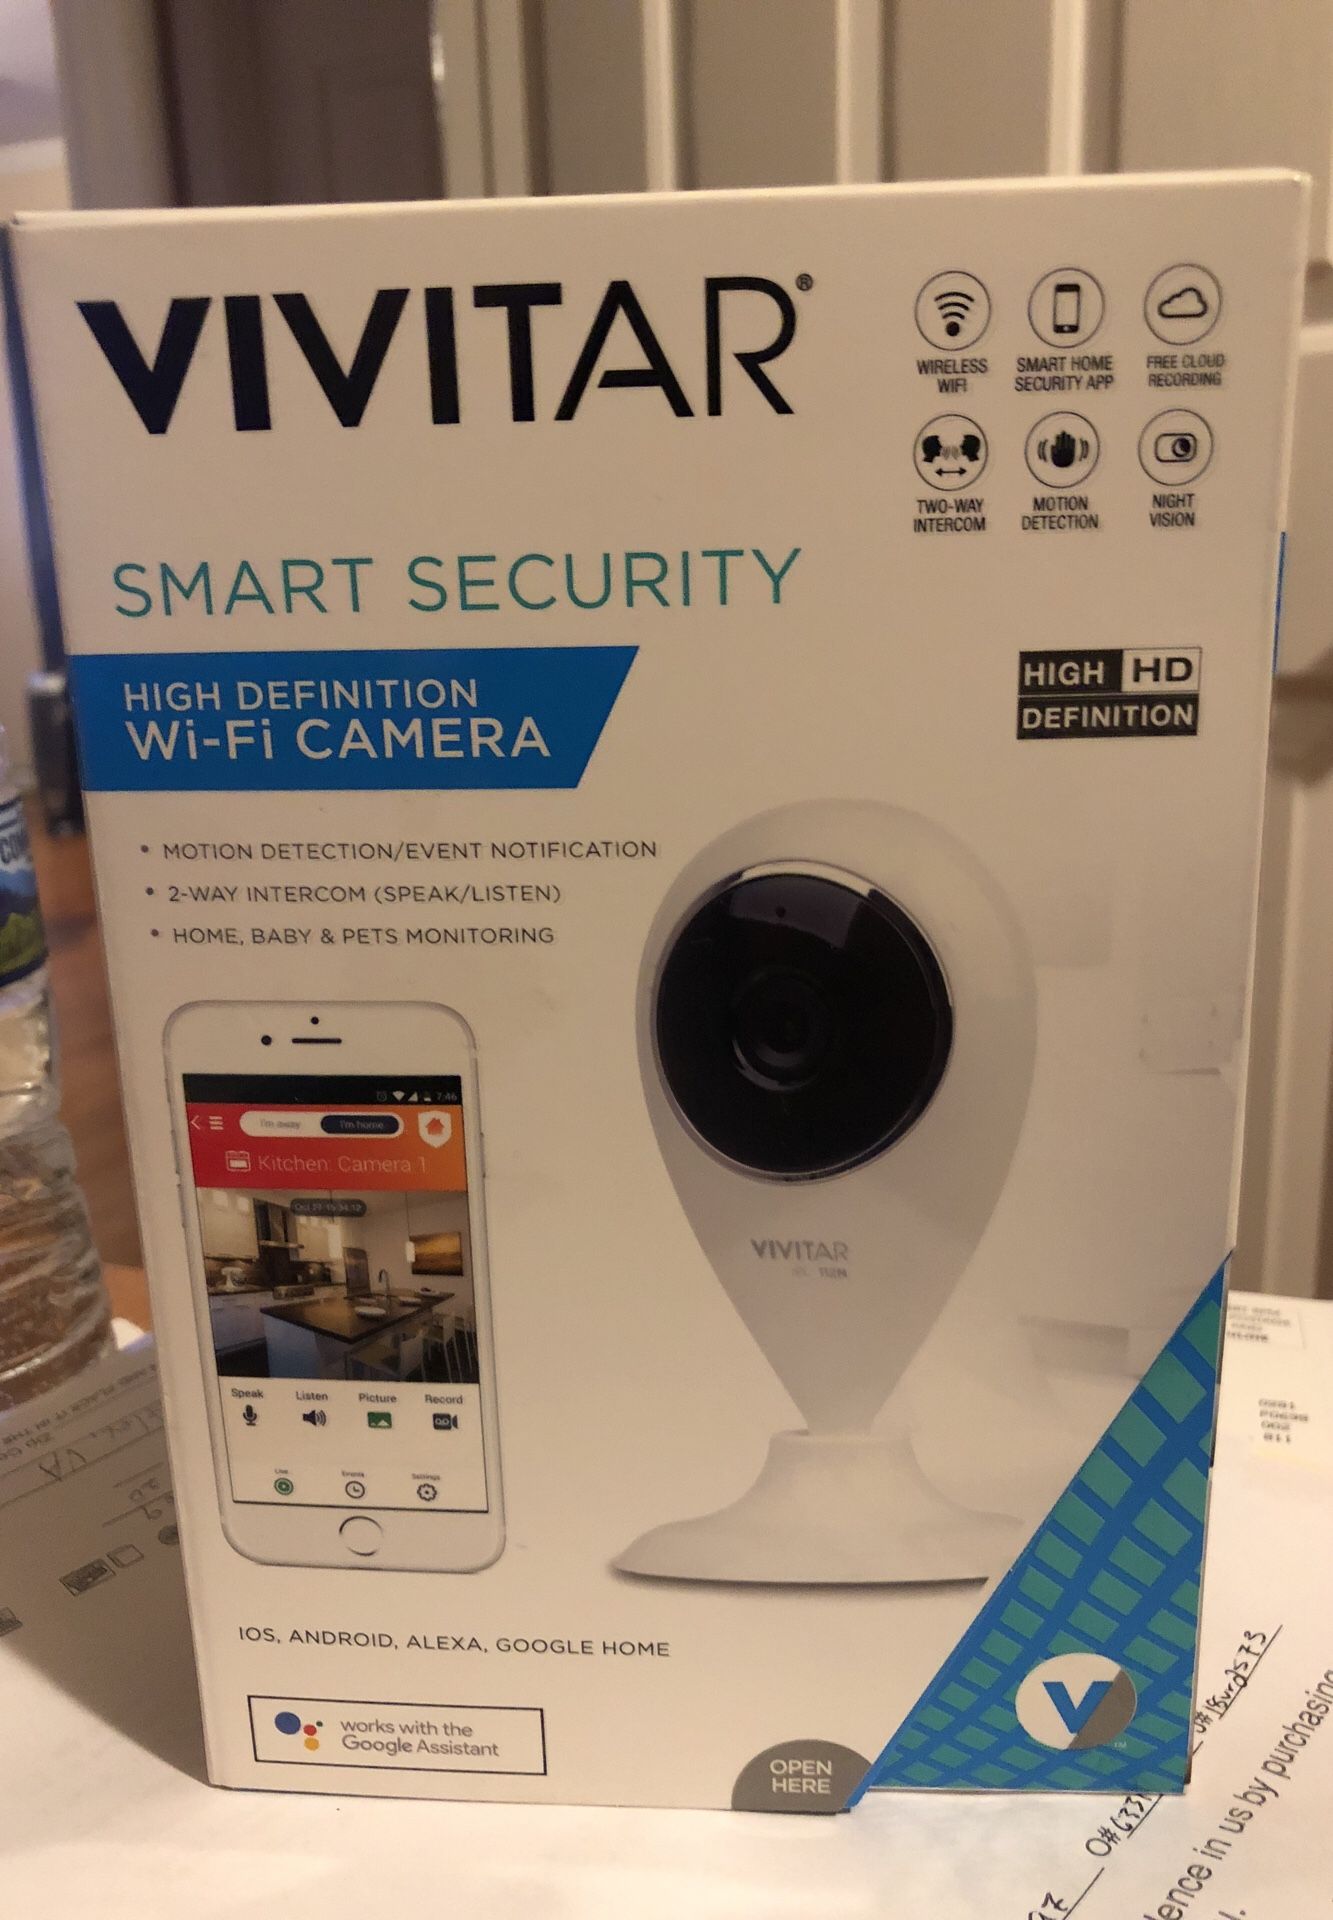 Vivitar smart security camera in the box never open